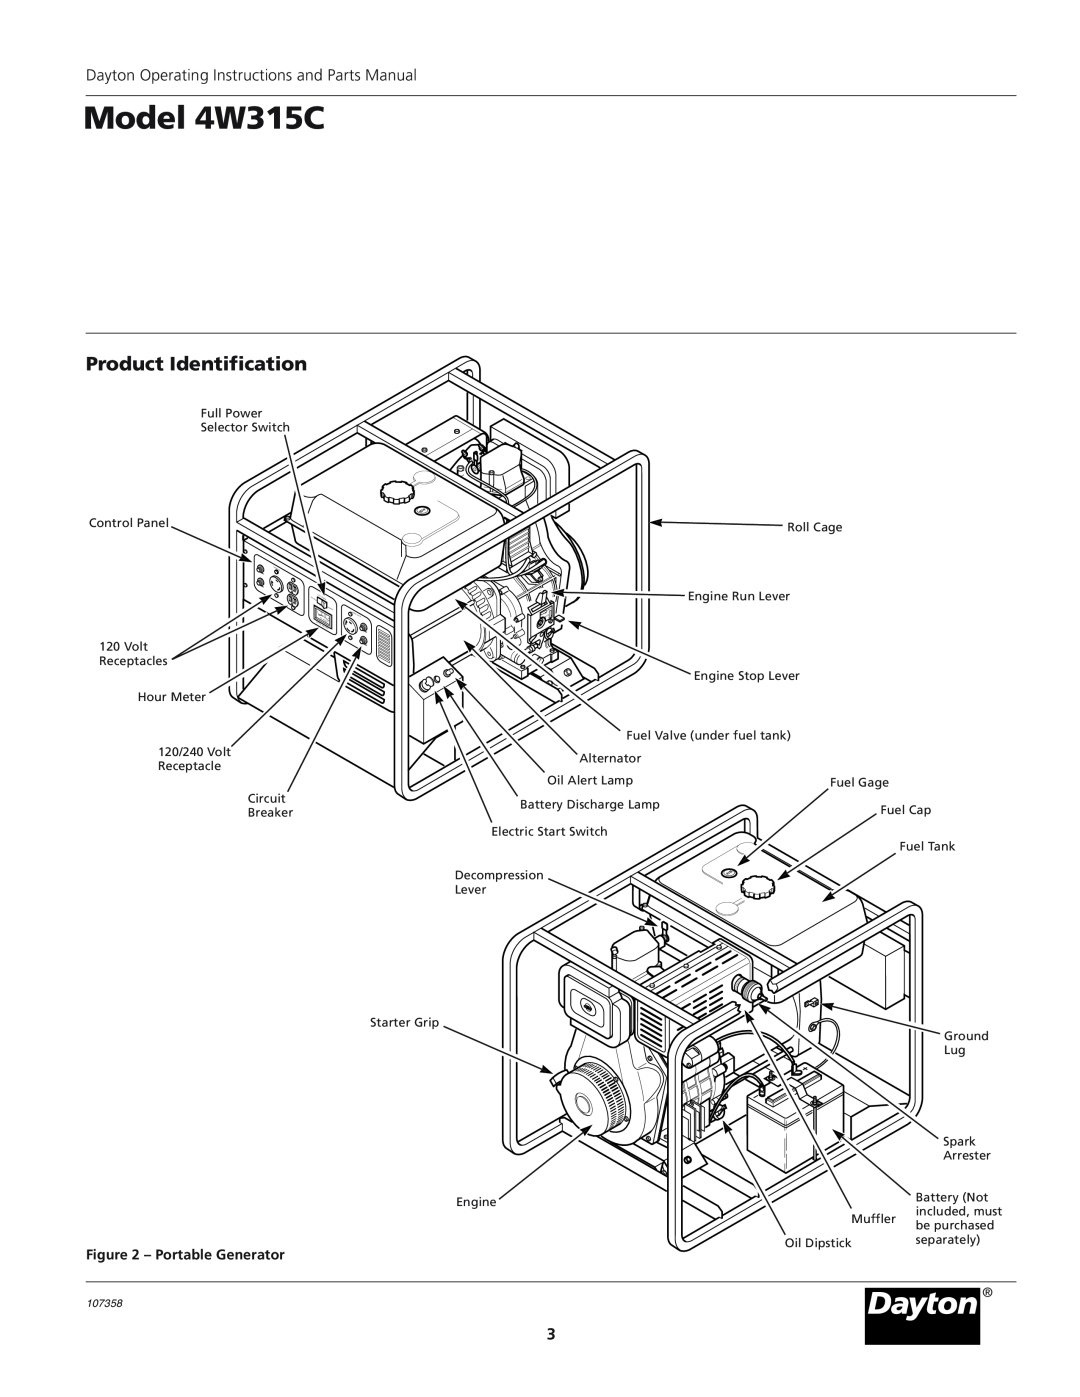 VDO Dayton Model 4W315C, Product Identification, Portable Generator, Roll Cage, Engine Run Lever, Decompression 